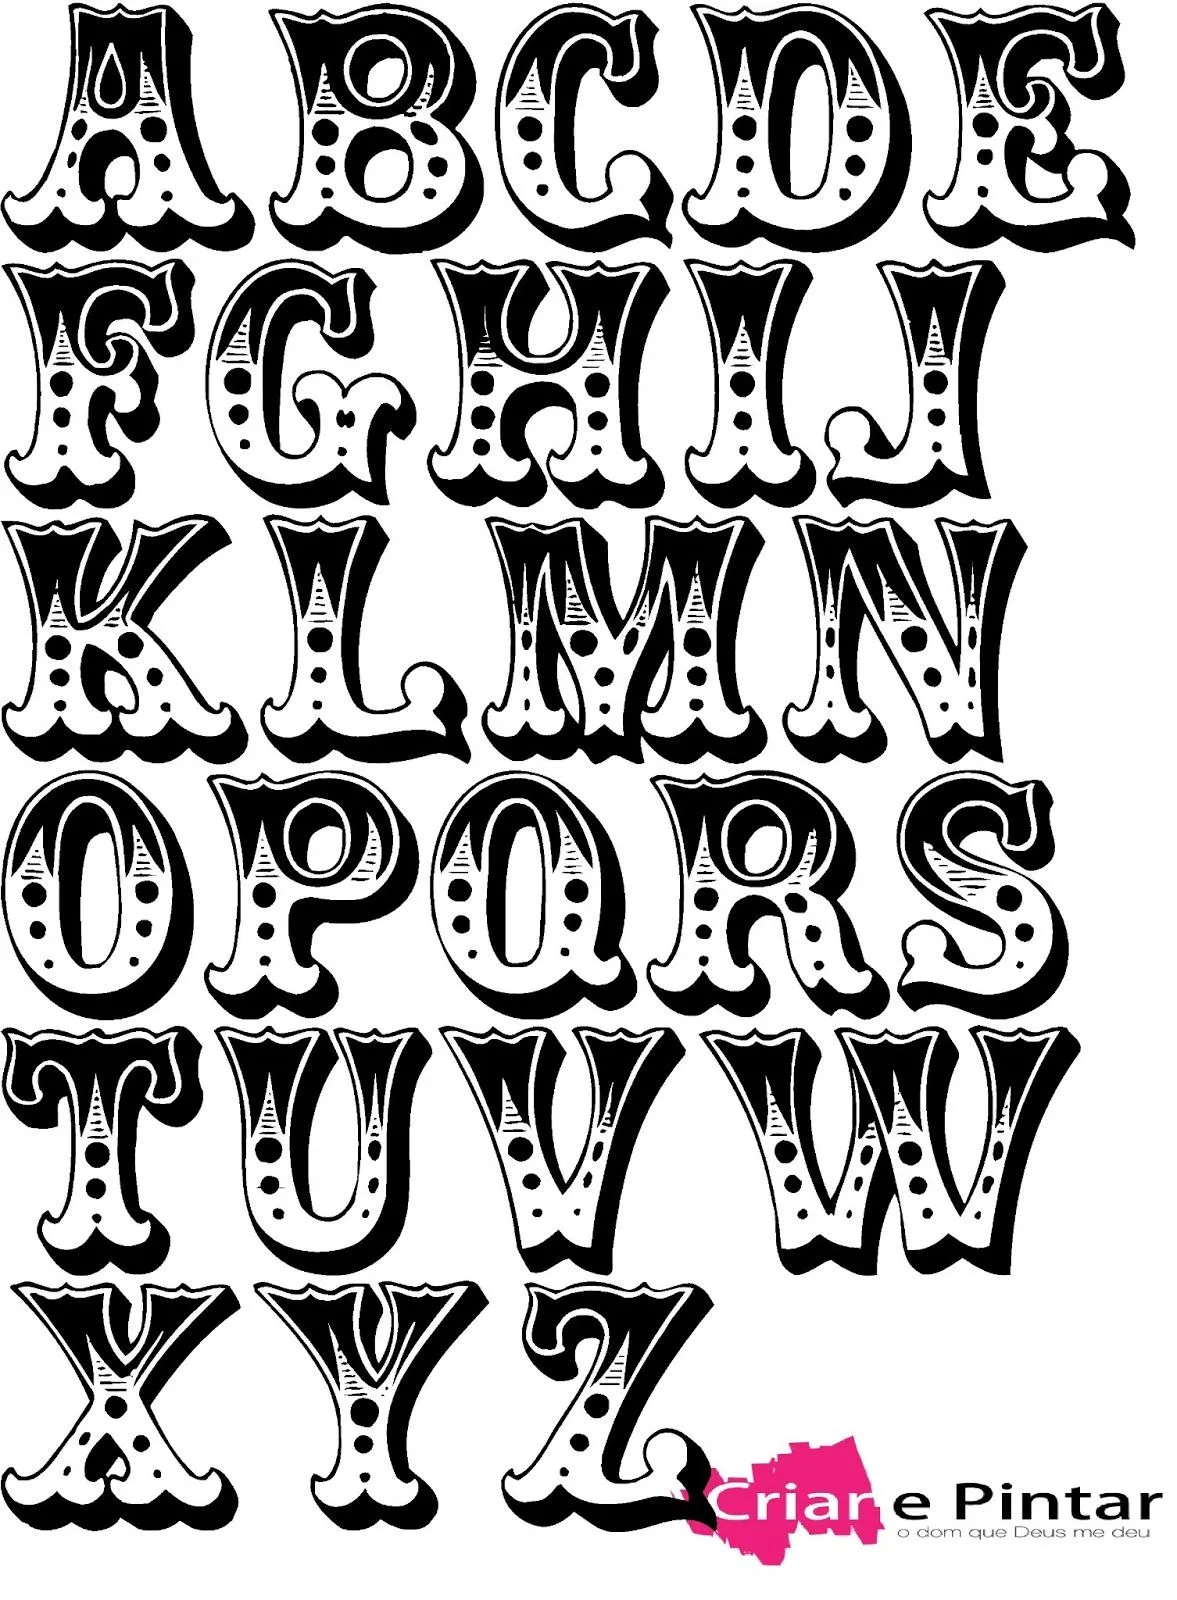 Pin Alfabeto De Letras Diferentes Httpwwwcriarepintarcombr201203 ...